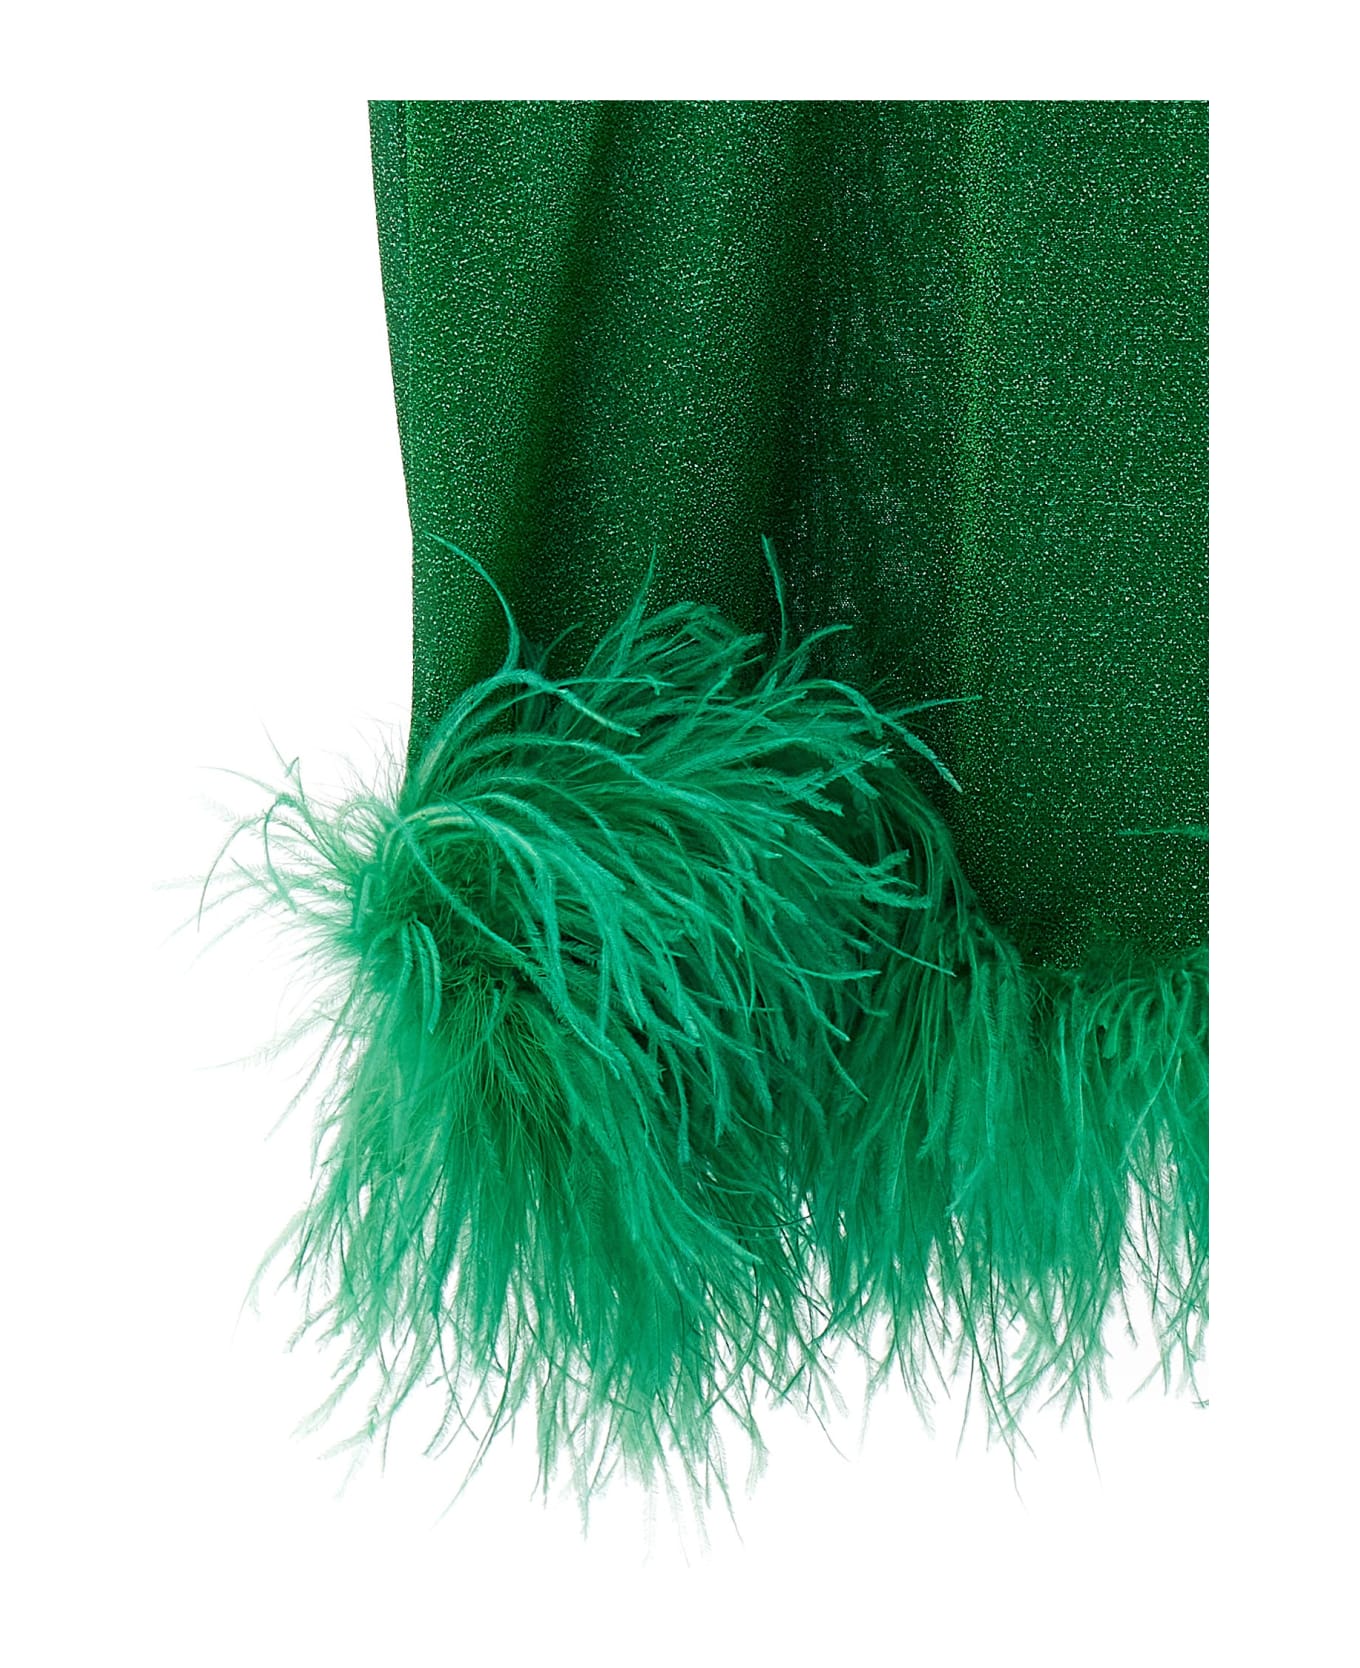 Oseree 'lumiere Plumage' Dress - Emerald Green